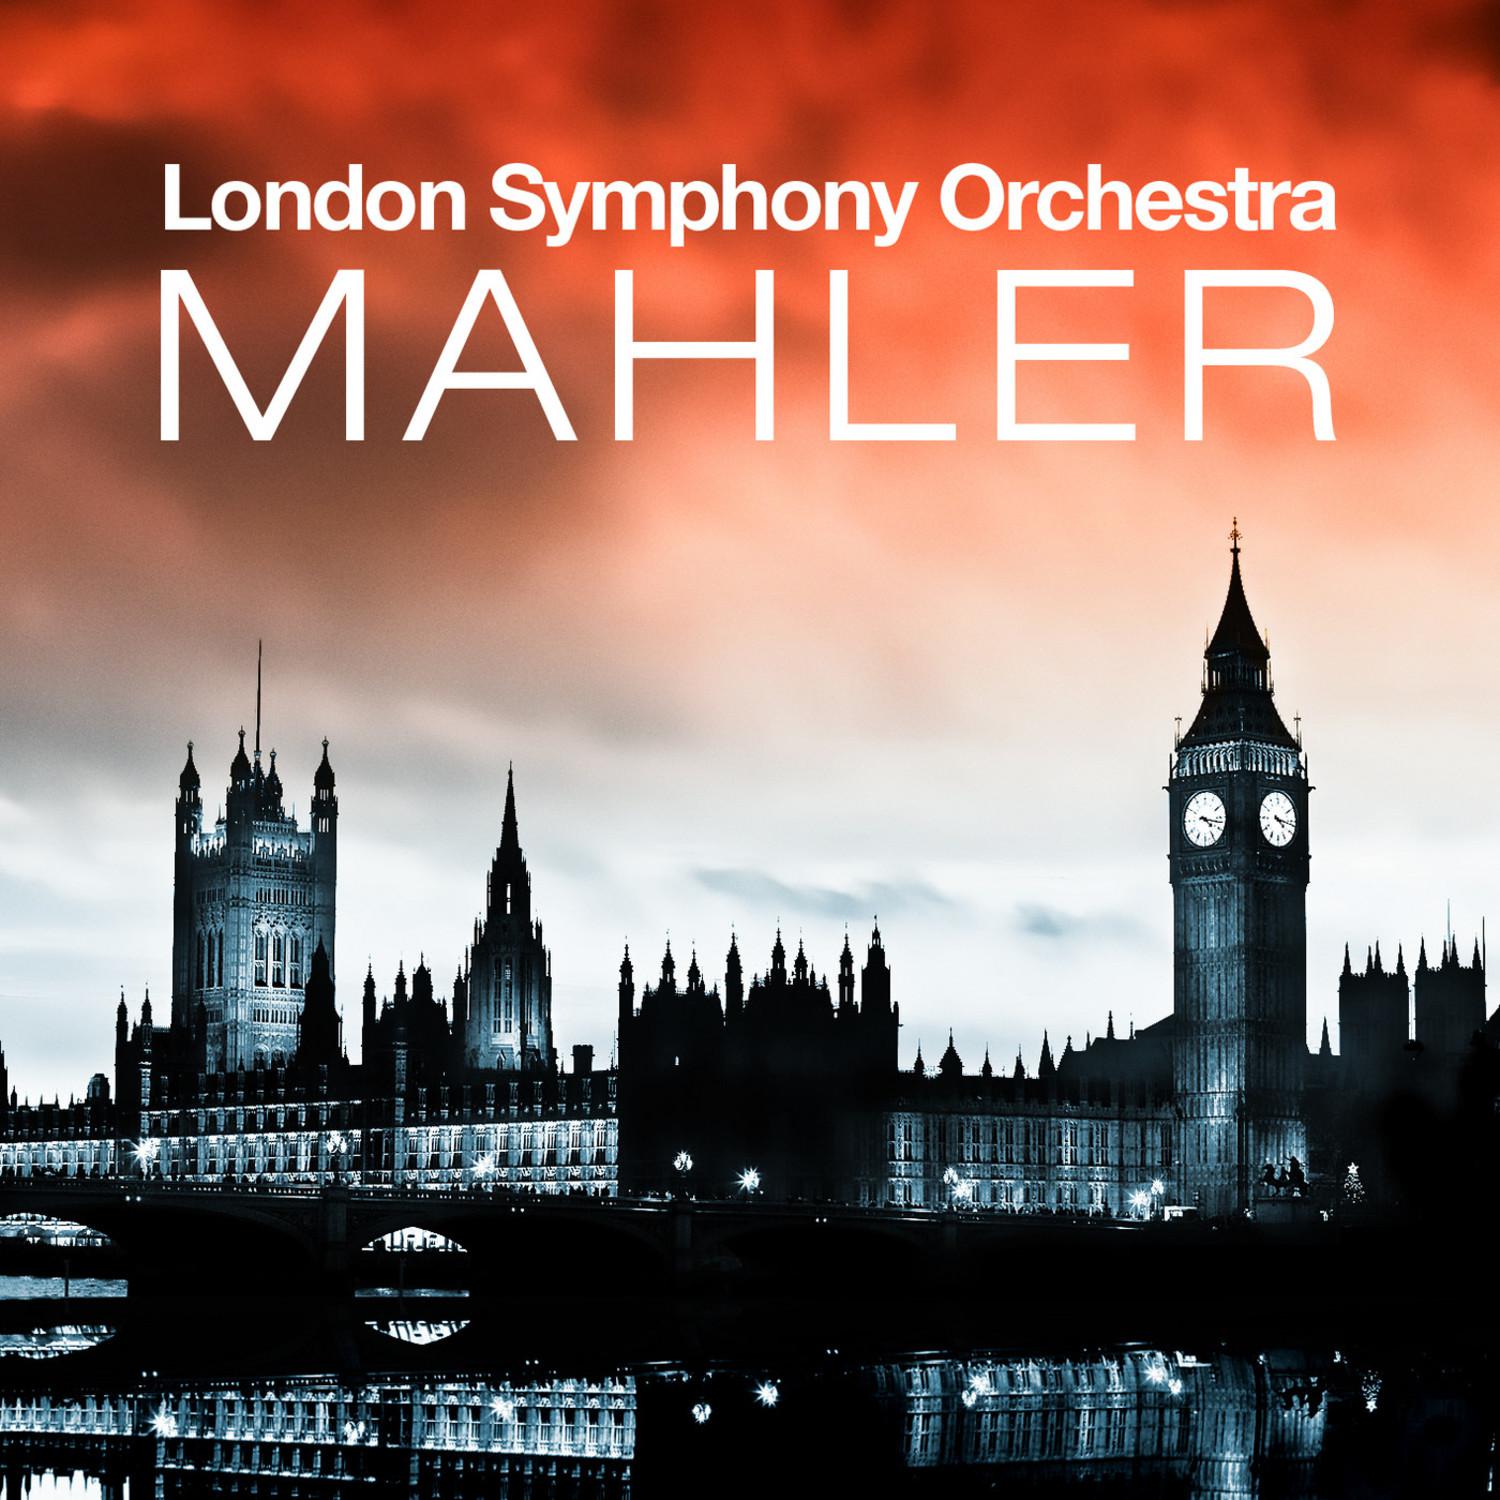 London Symphony Orchestra plays Mahler